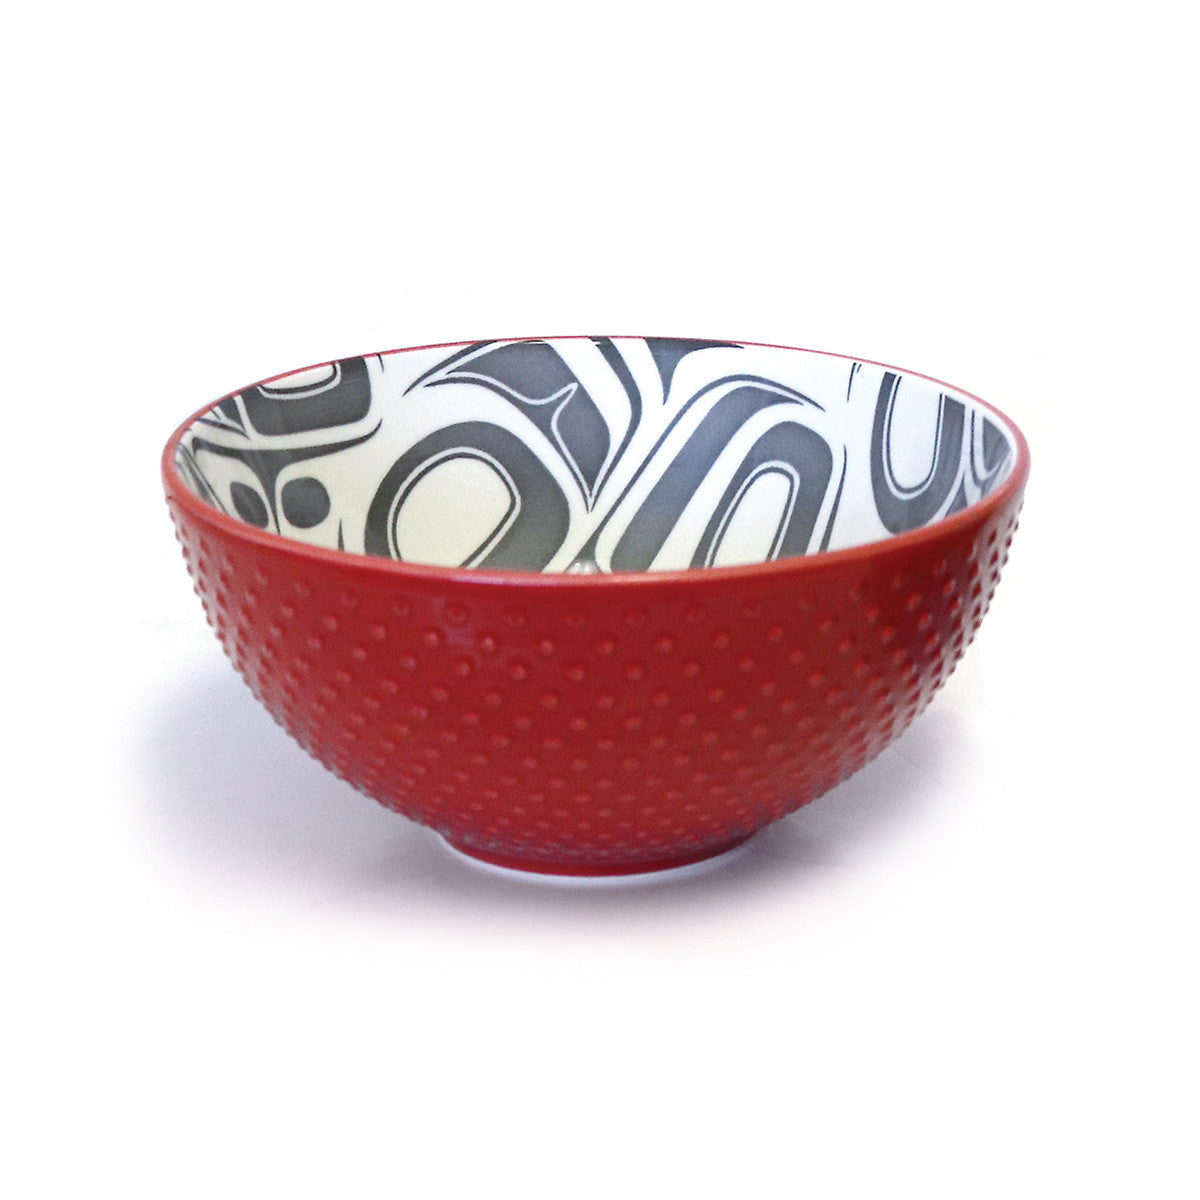 Transforming Eagle Porcelain Bowl by Ryan Cranmer